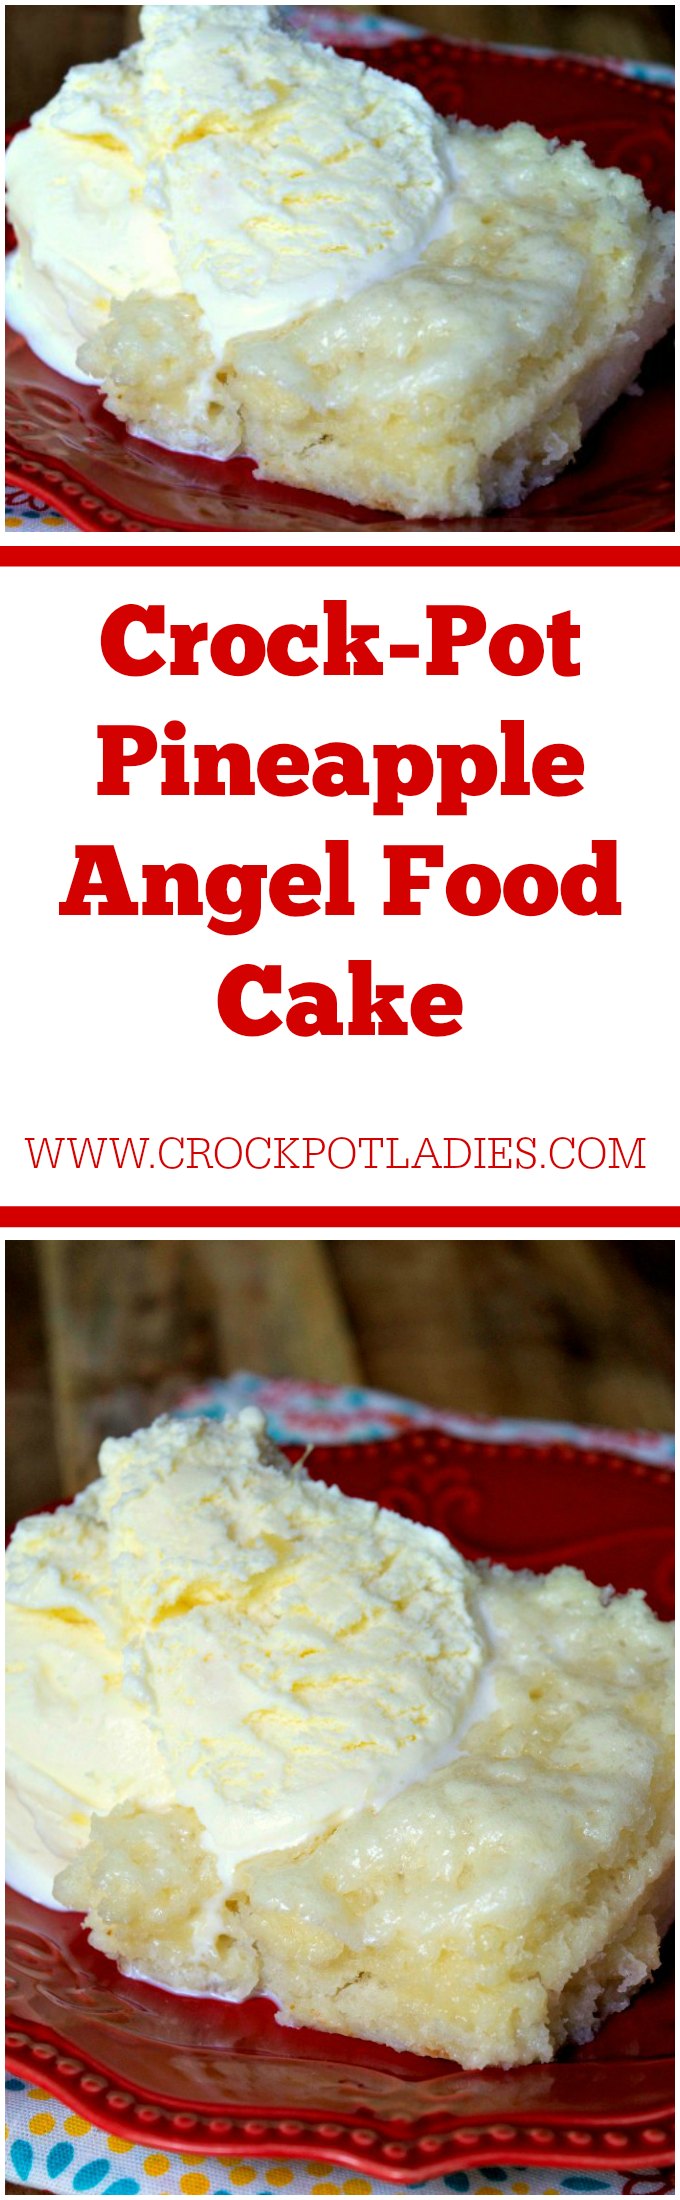 Crock-Pot Pineapple Angel Food Cake